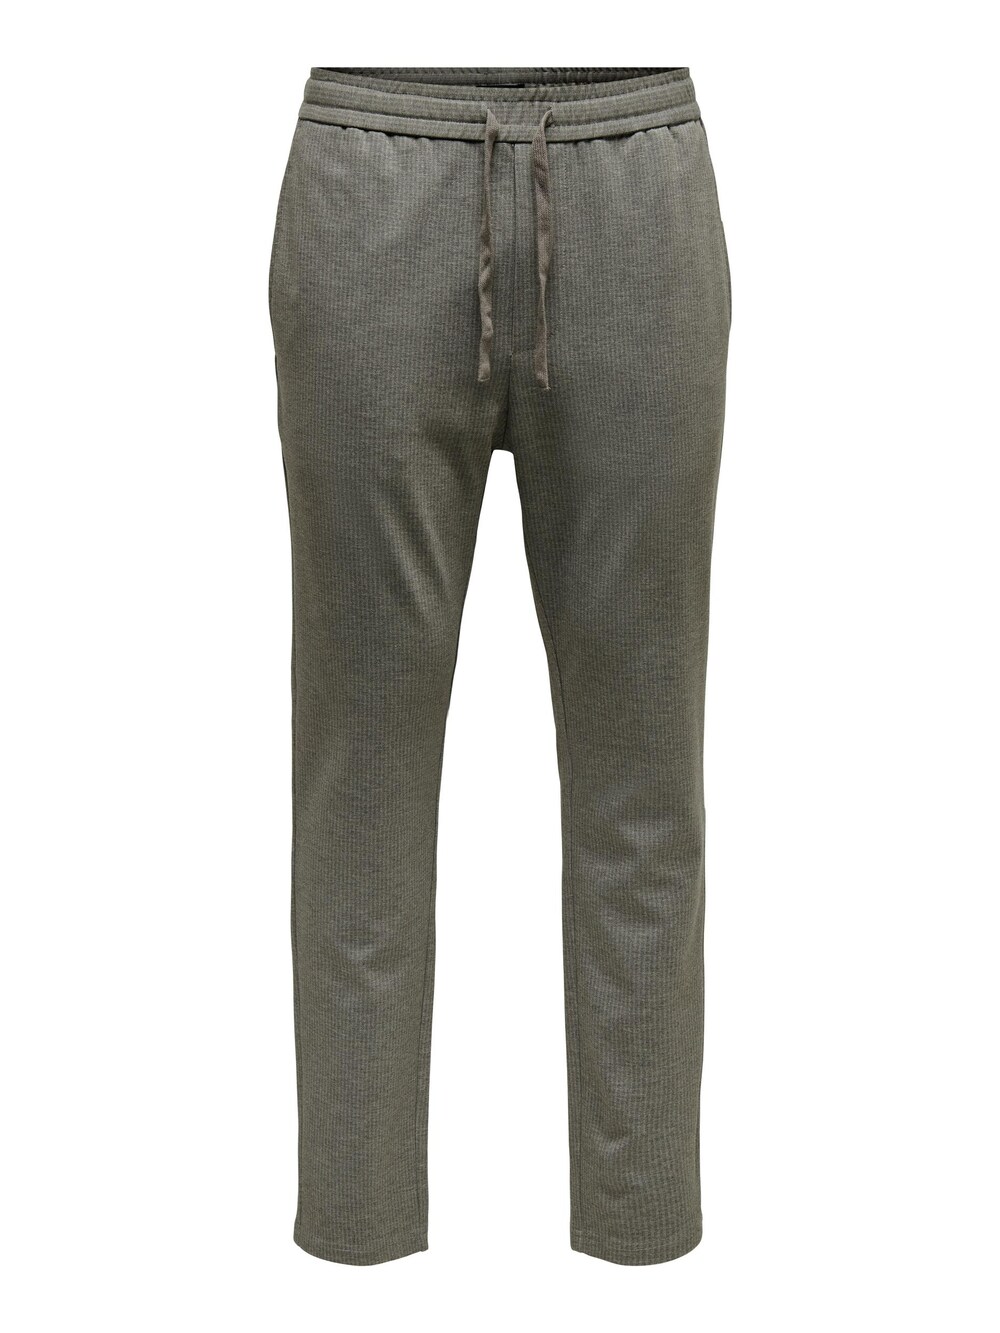 Обычные брюки Only & Sons Linus, базальтово-серый/светло-серый